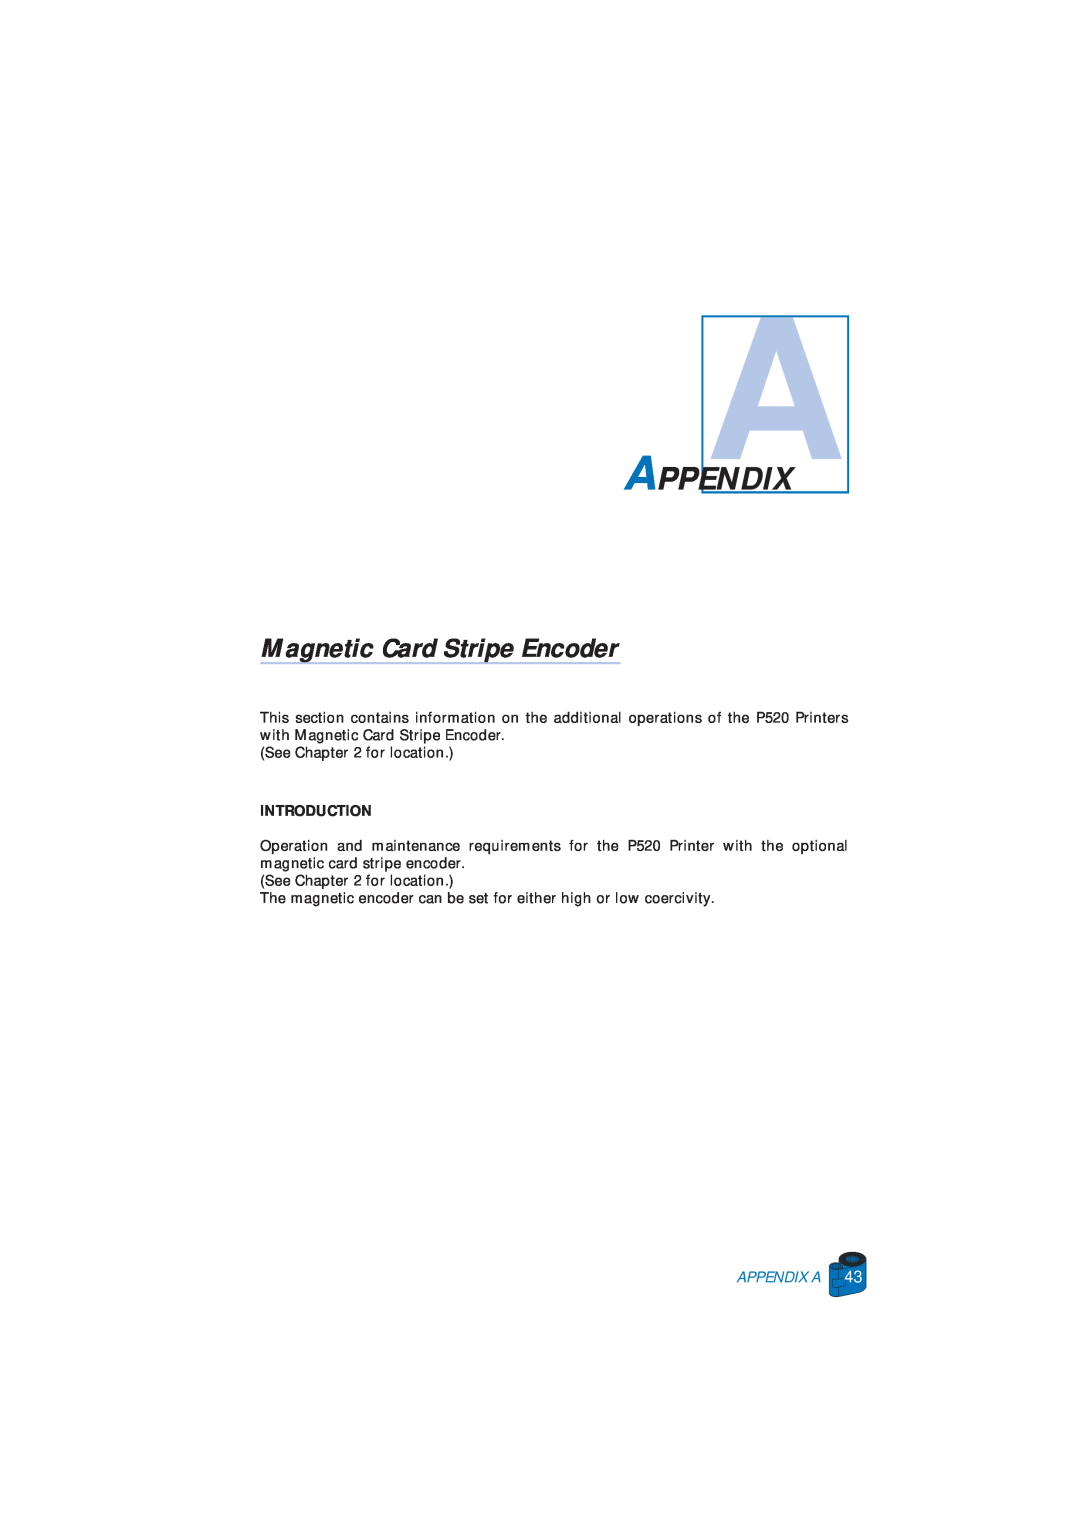 Zebra Technologies P520 user manual Magnetic Card Stripe Encoder, Appendix A, Introduction 